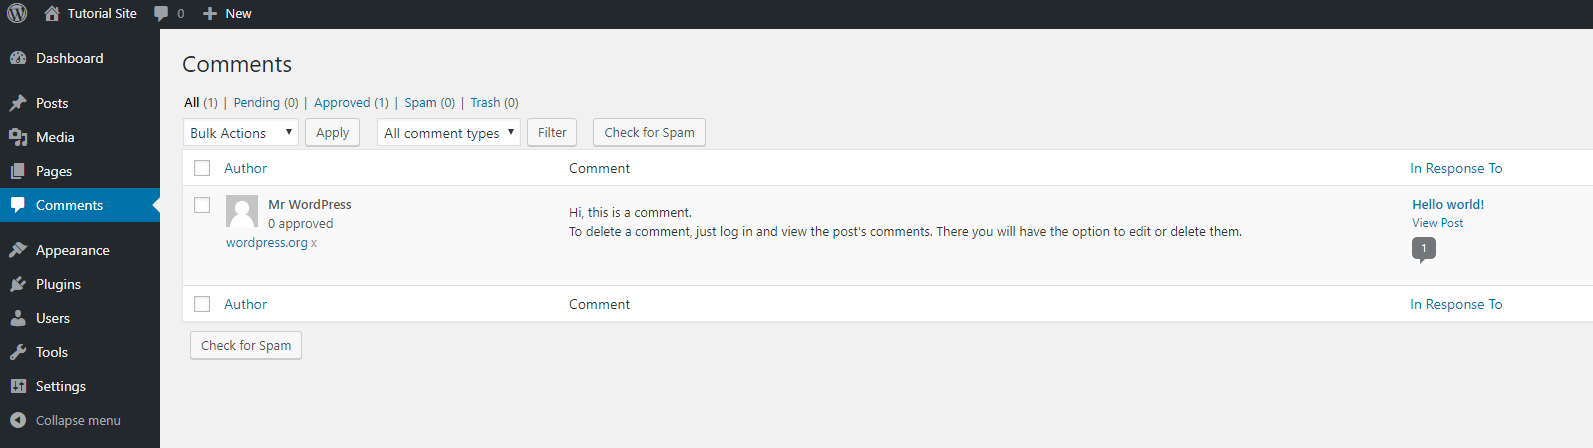 Wordpress comments